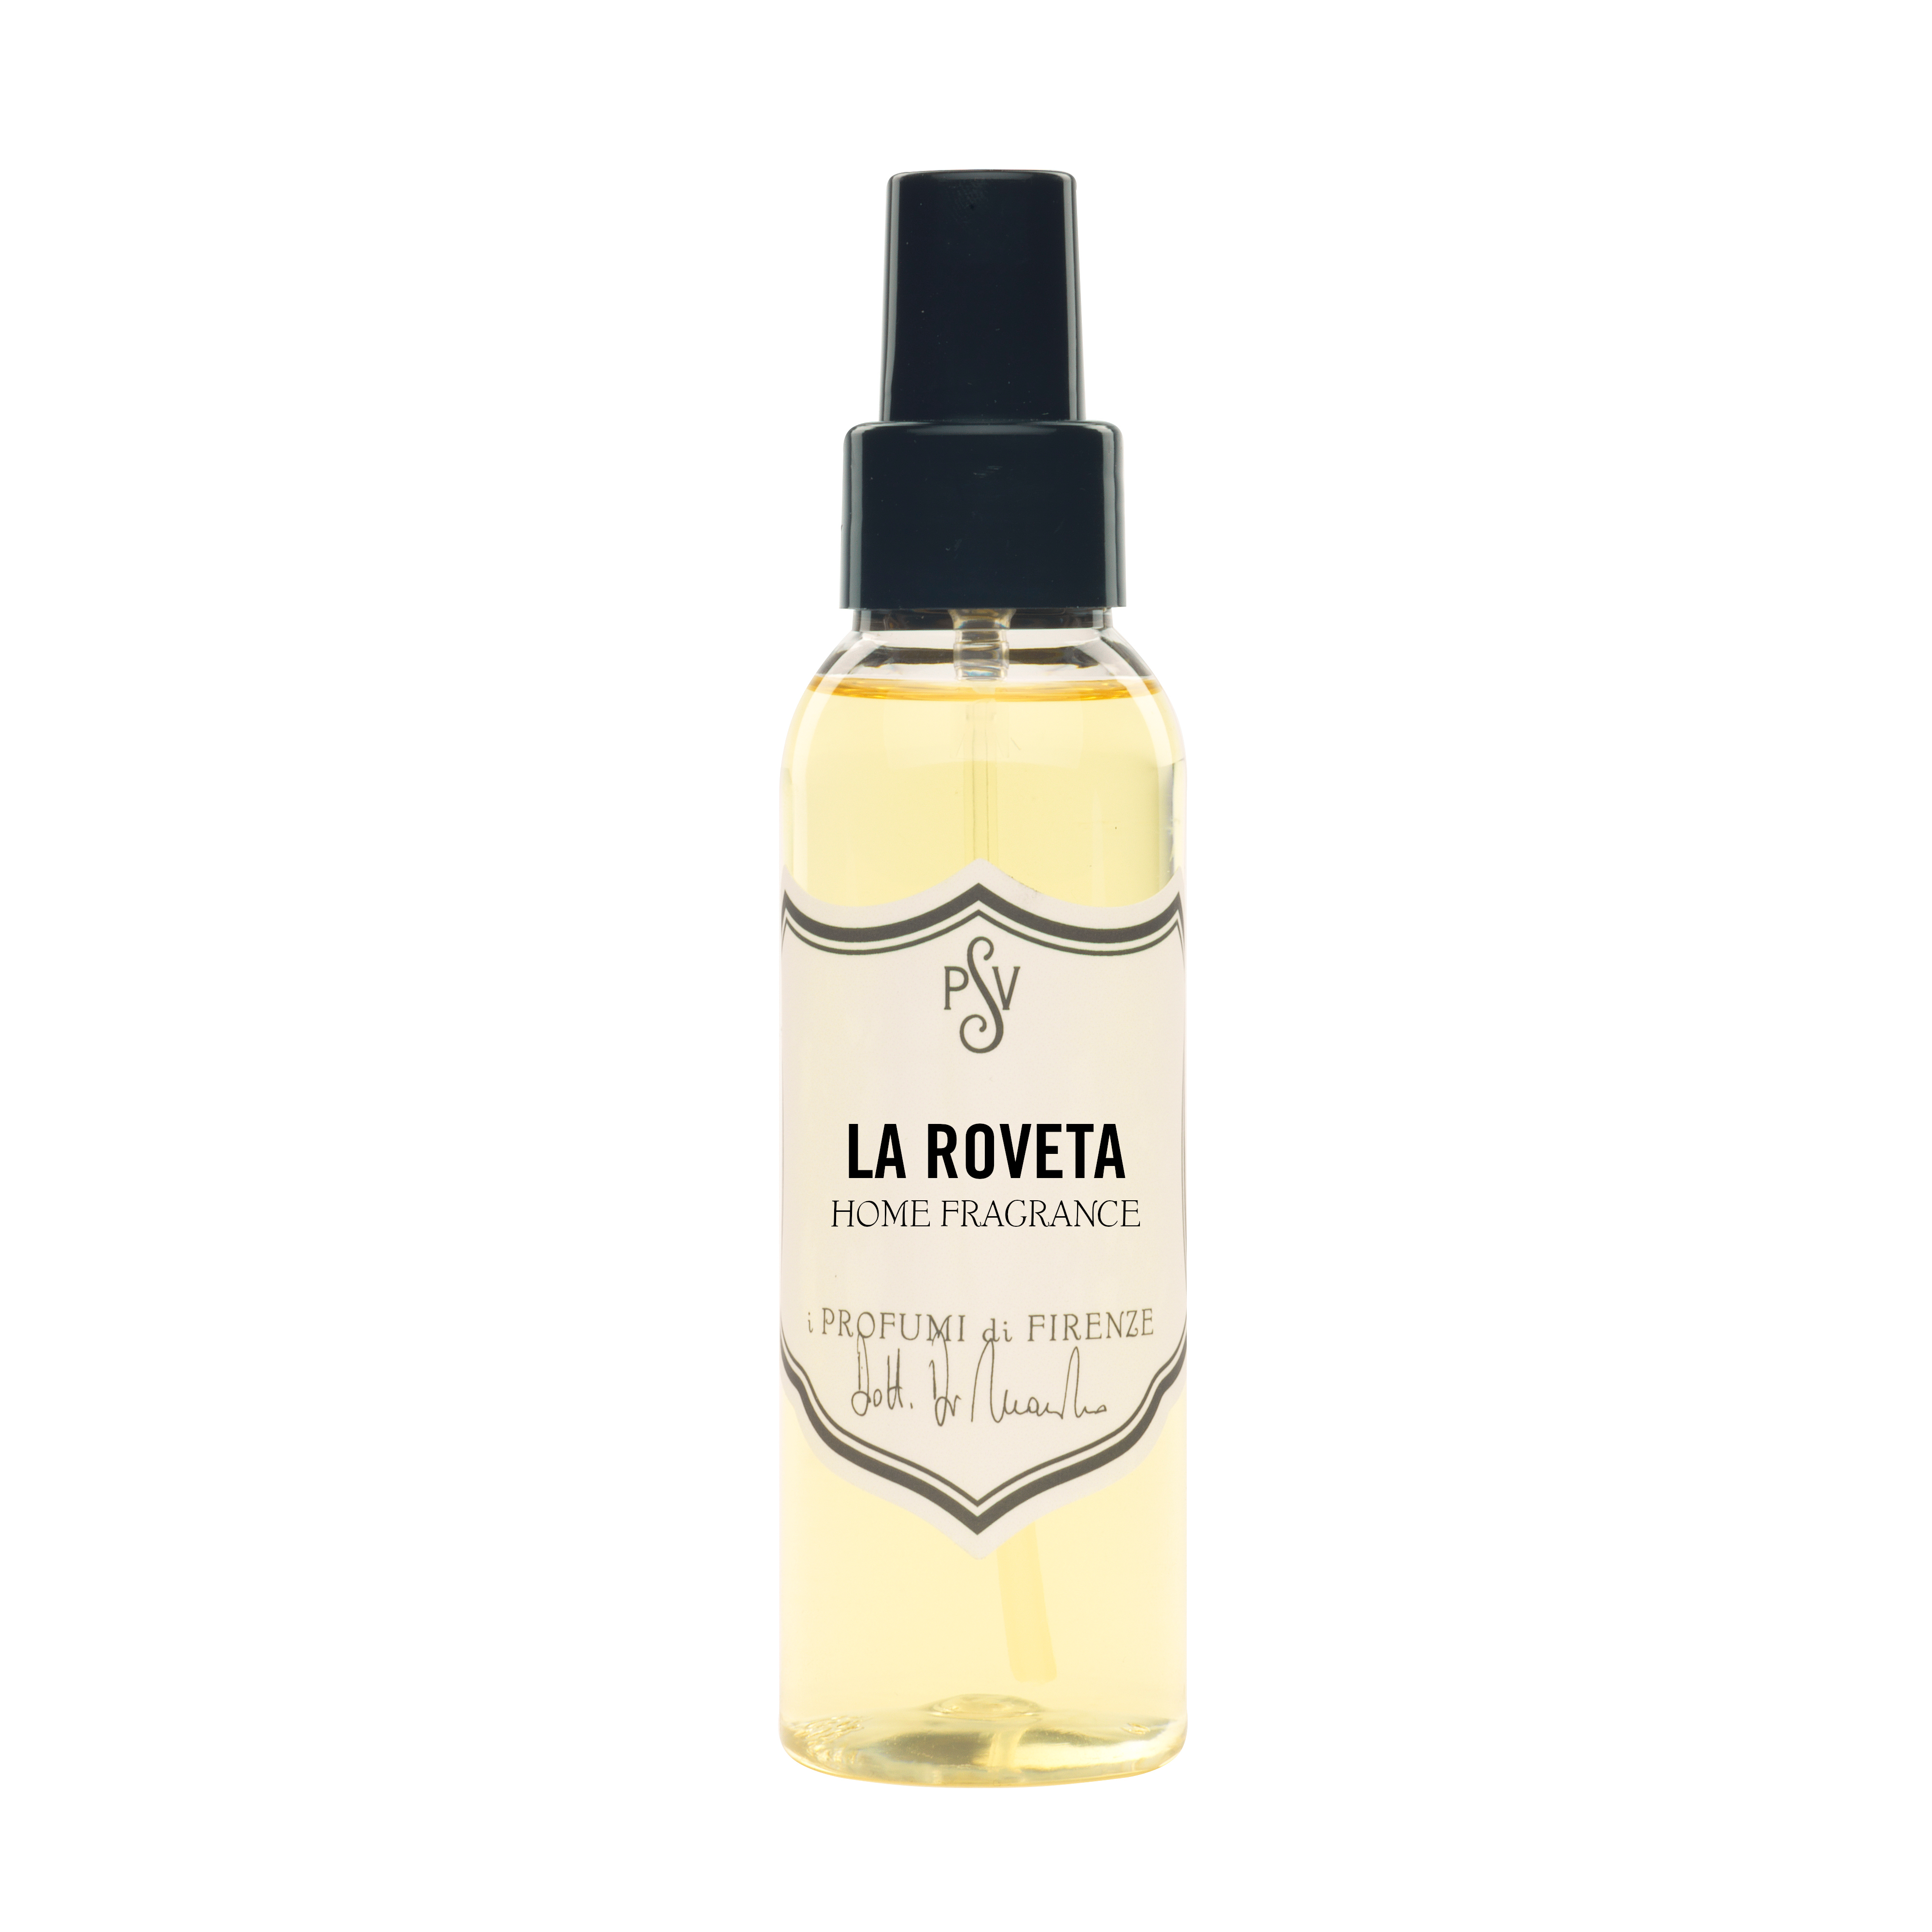 LA ROVETA - Home Fragrance-4444